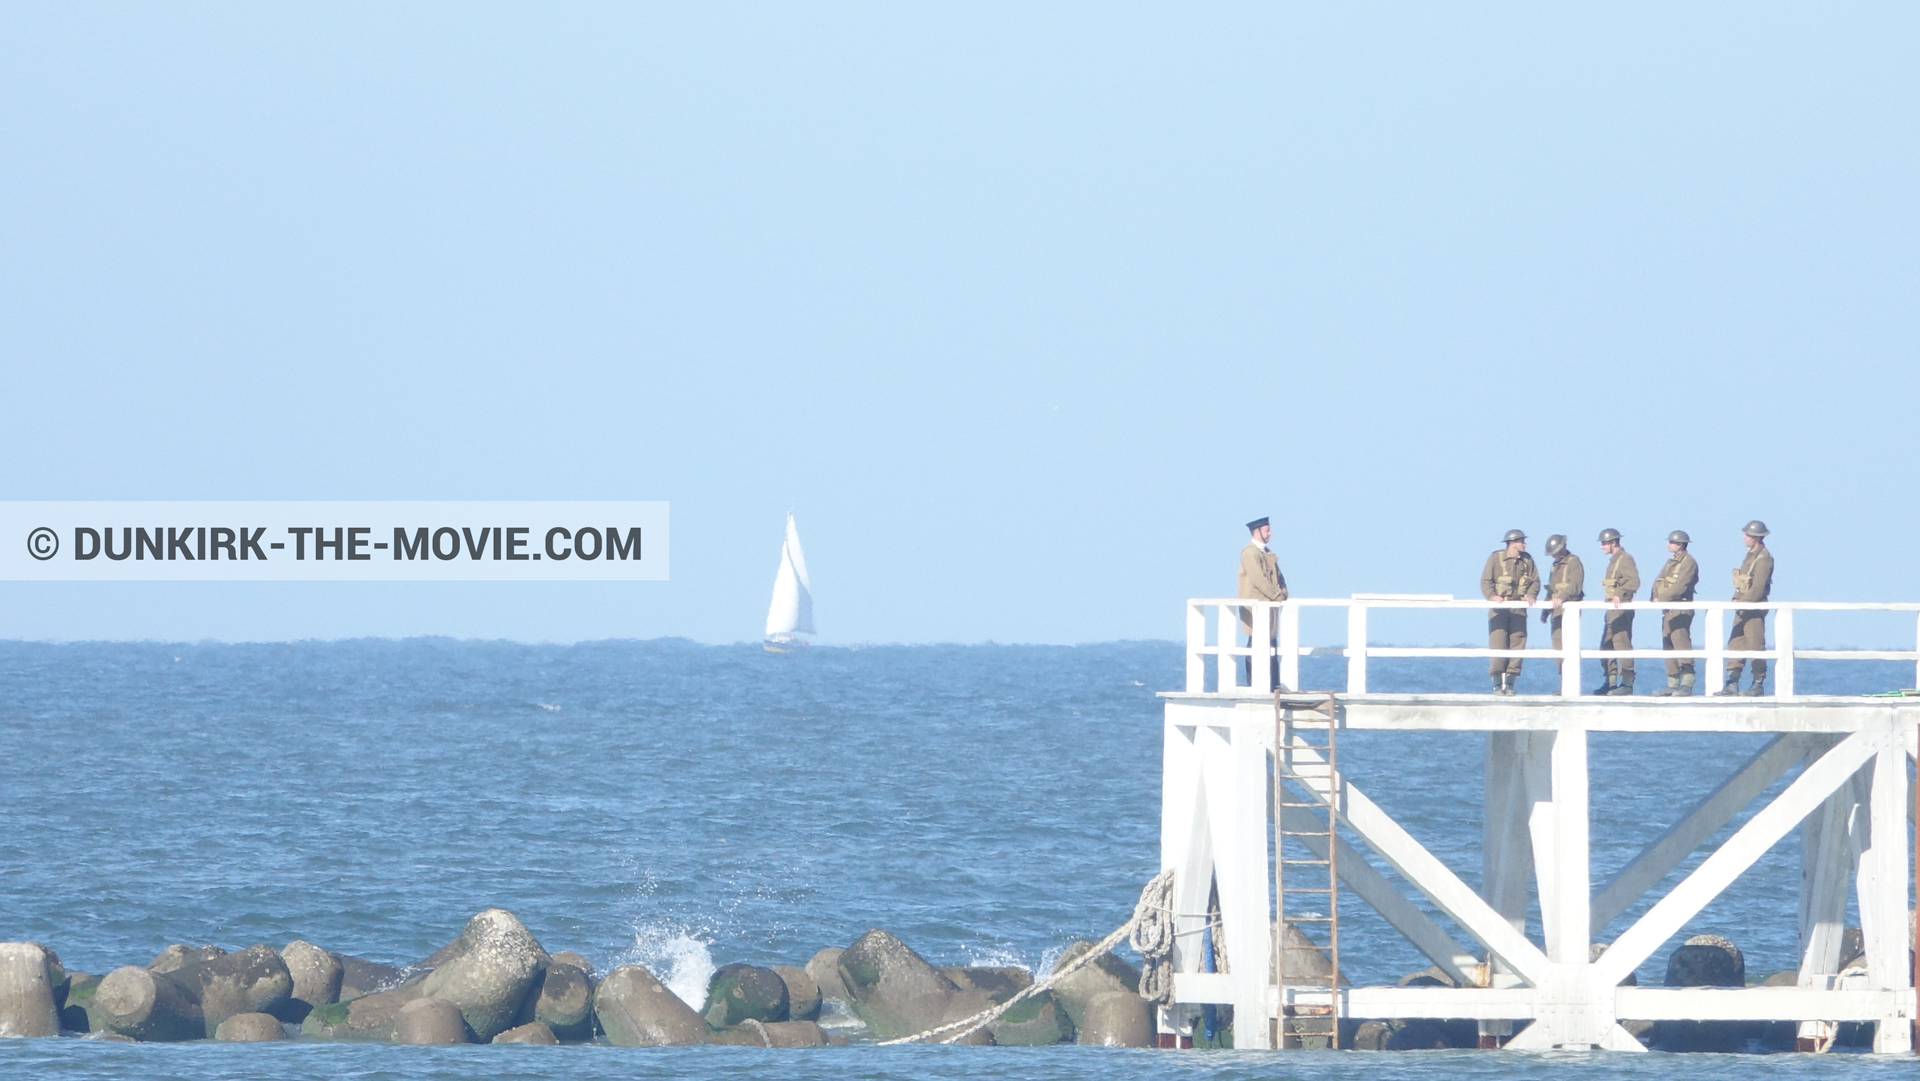 Photo avec acteur, ciel bleu, figurants, mer calme,  des dessous du Film Dunkerque de Nolan